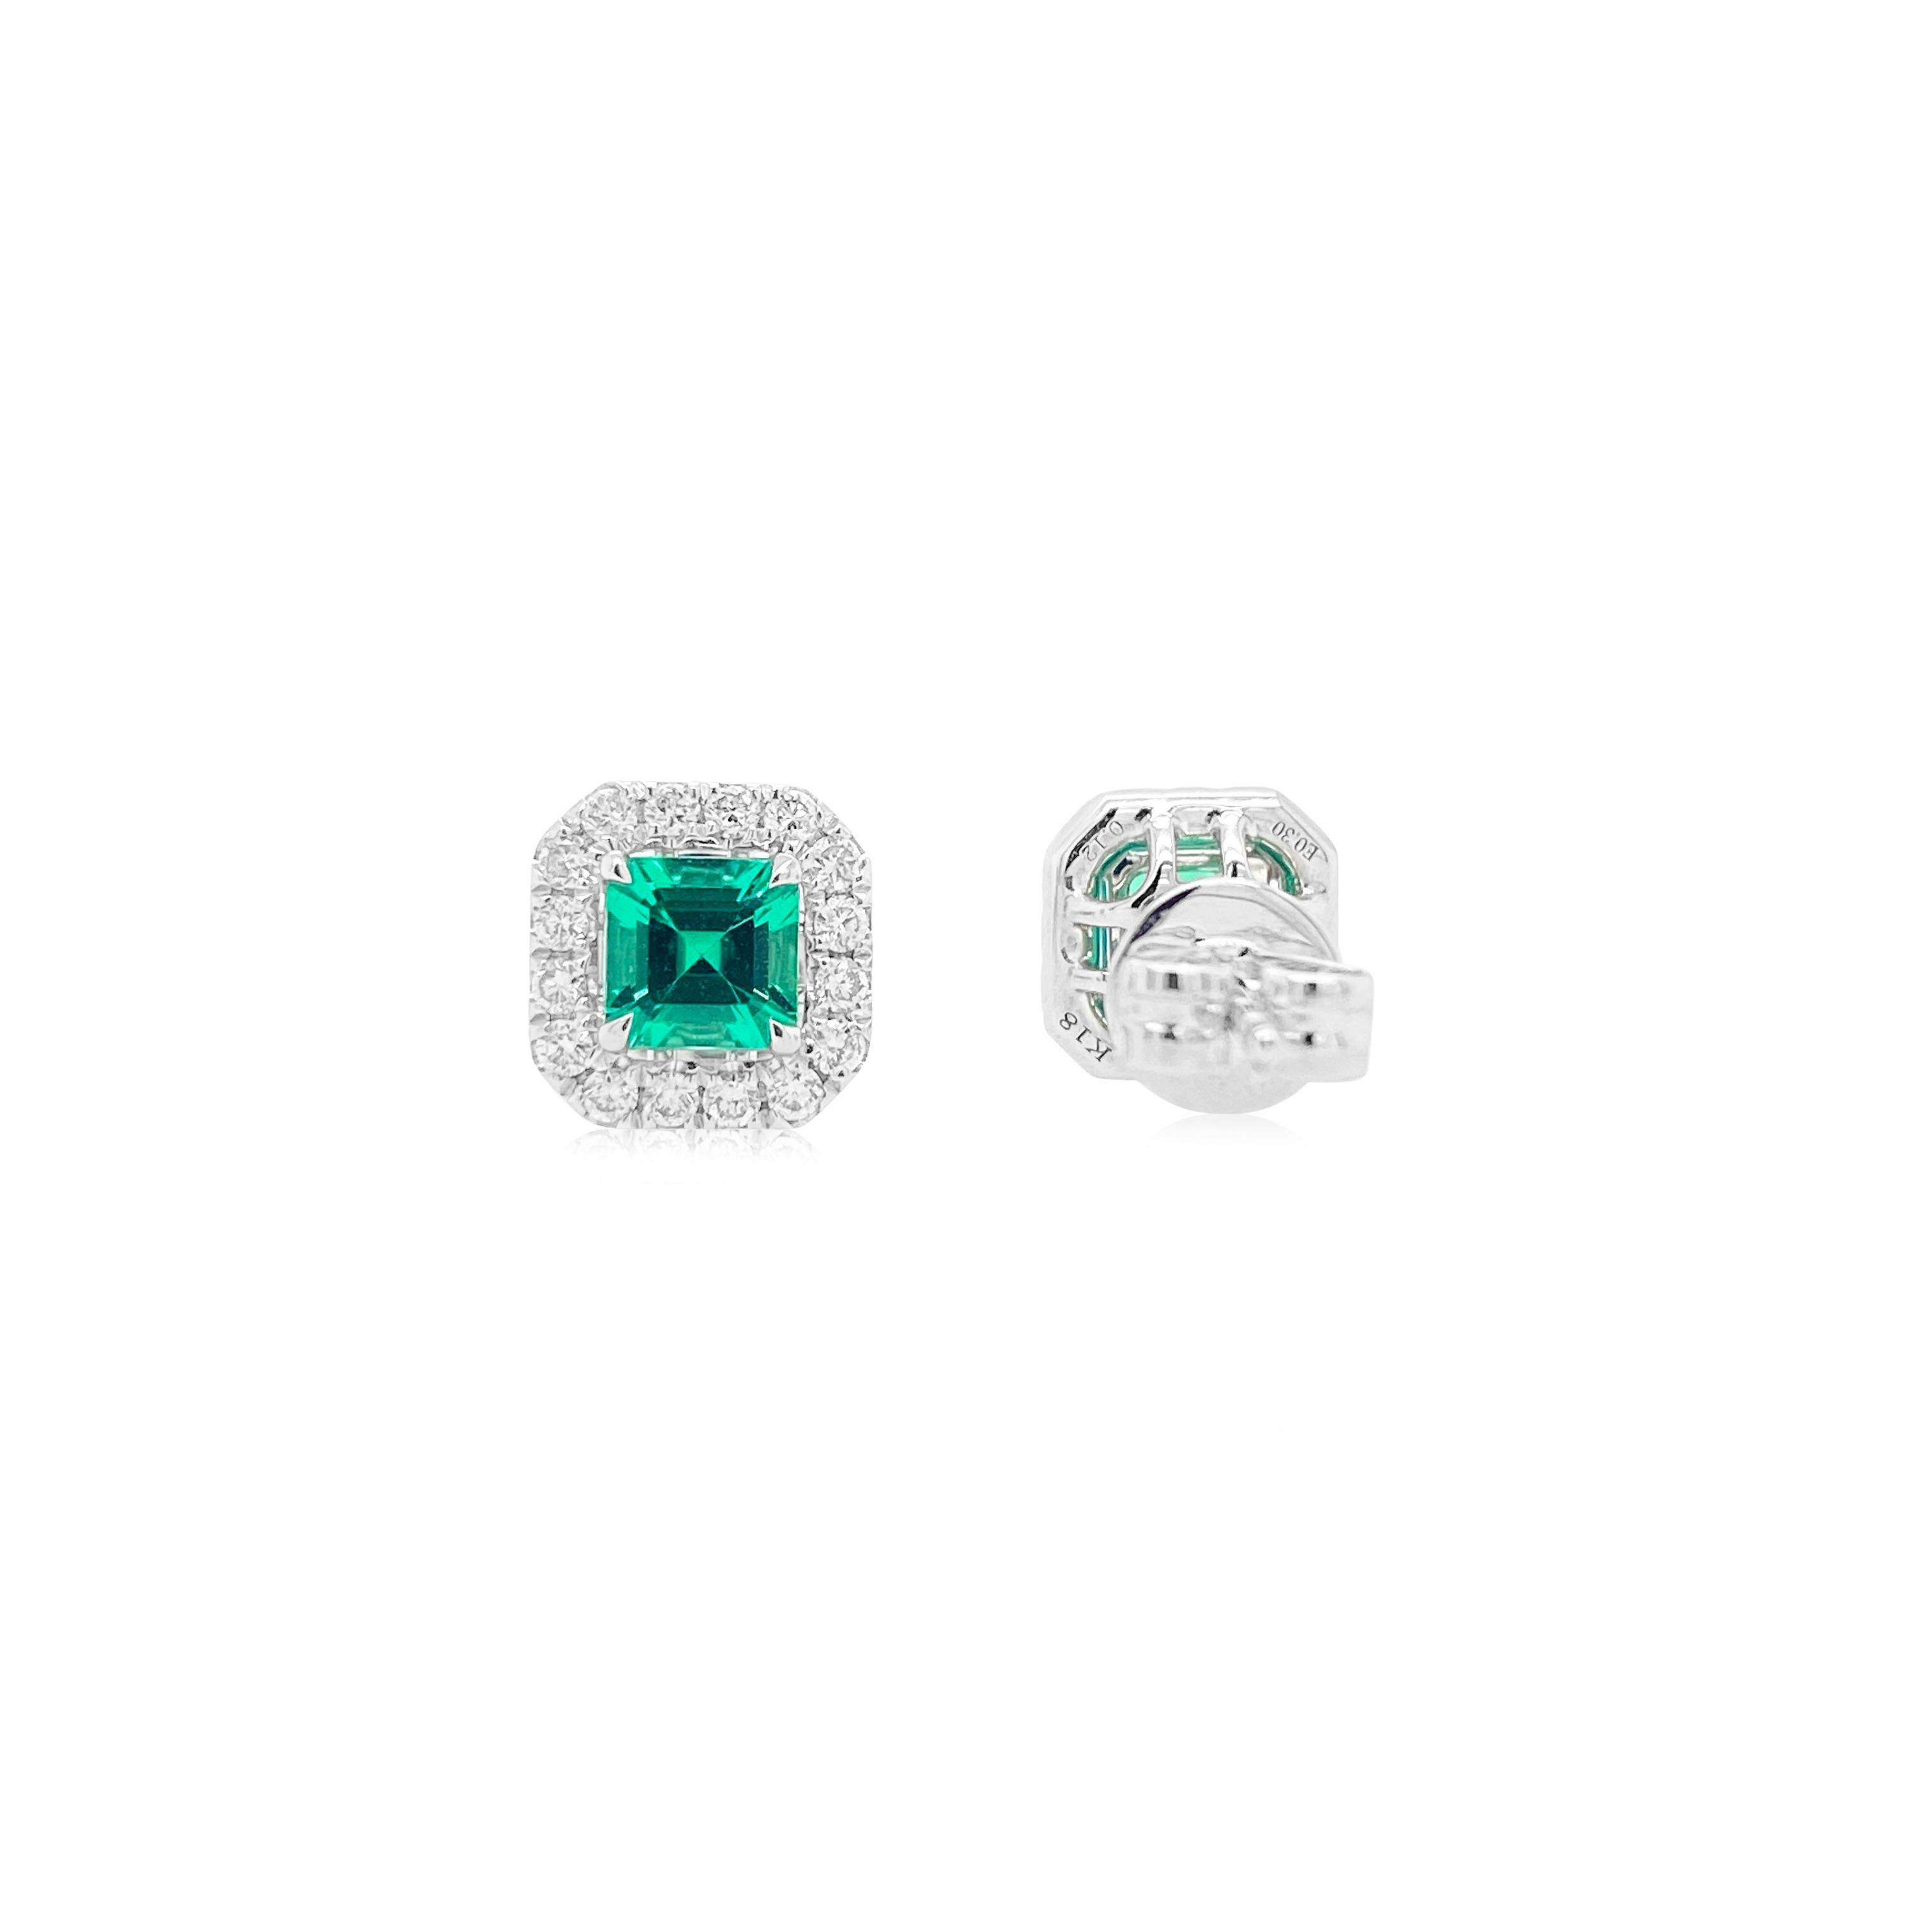 Contemporary Vivid Green Colombian Emerald Stud Earrings